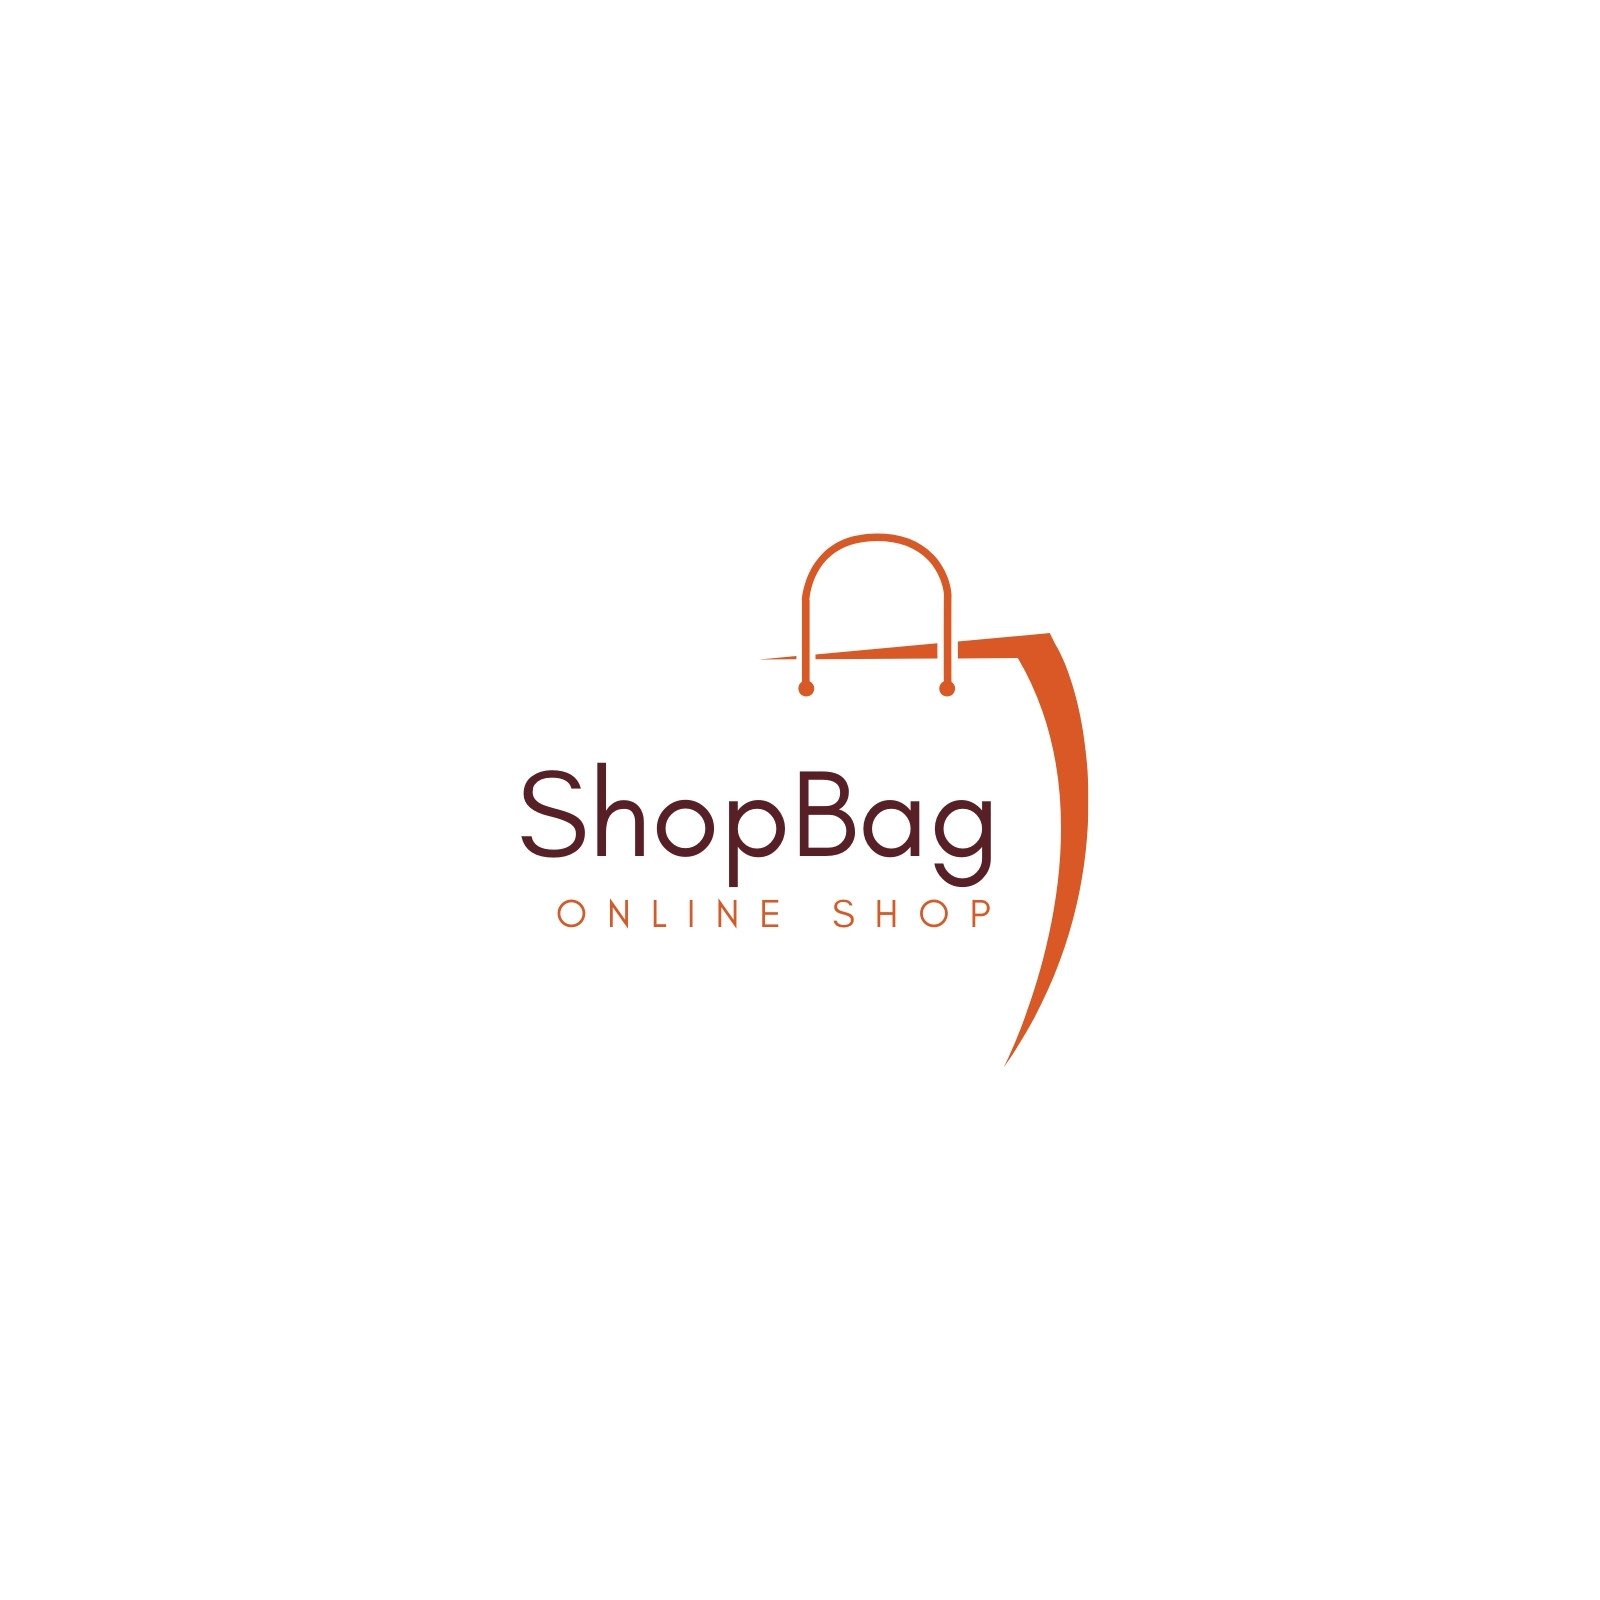 online shopping logo templates